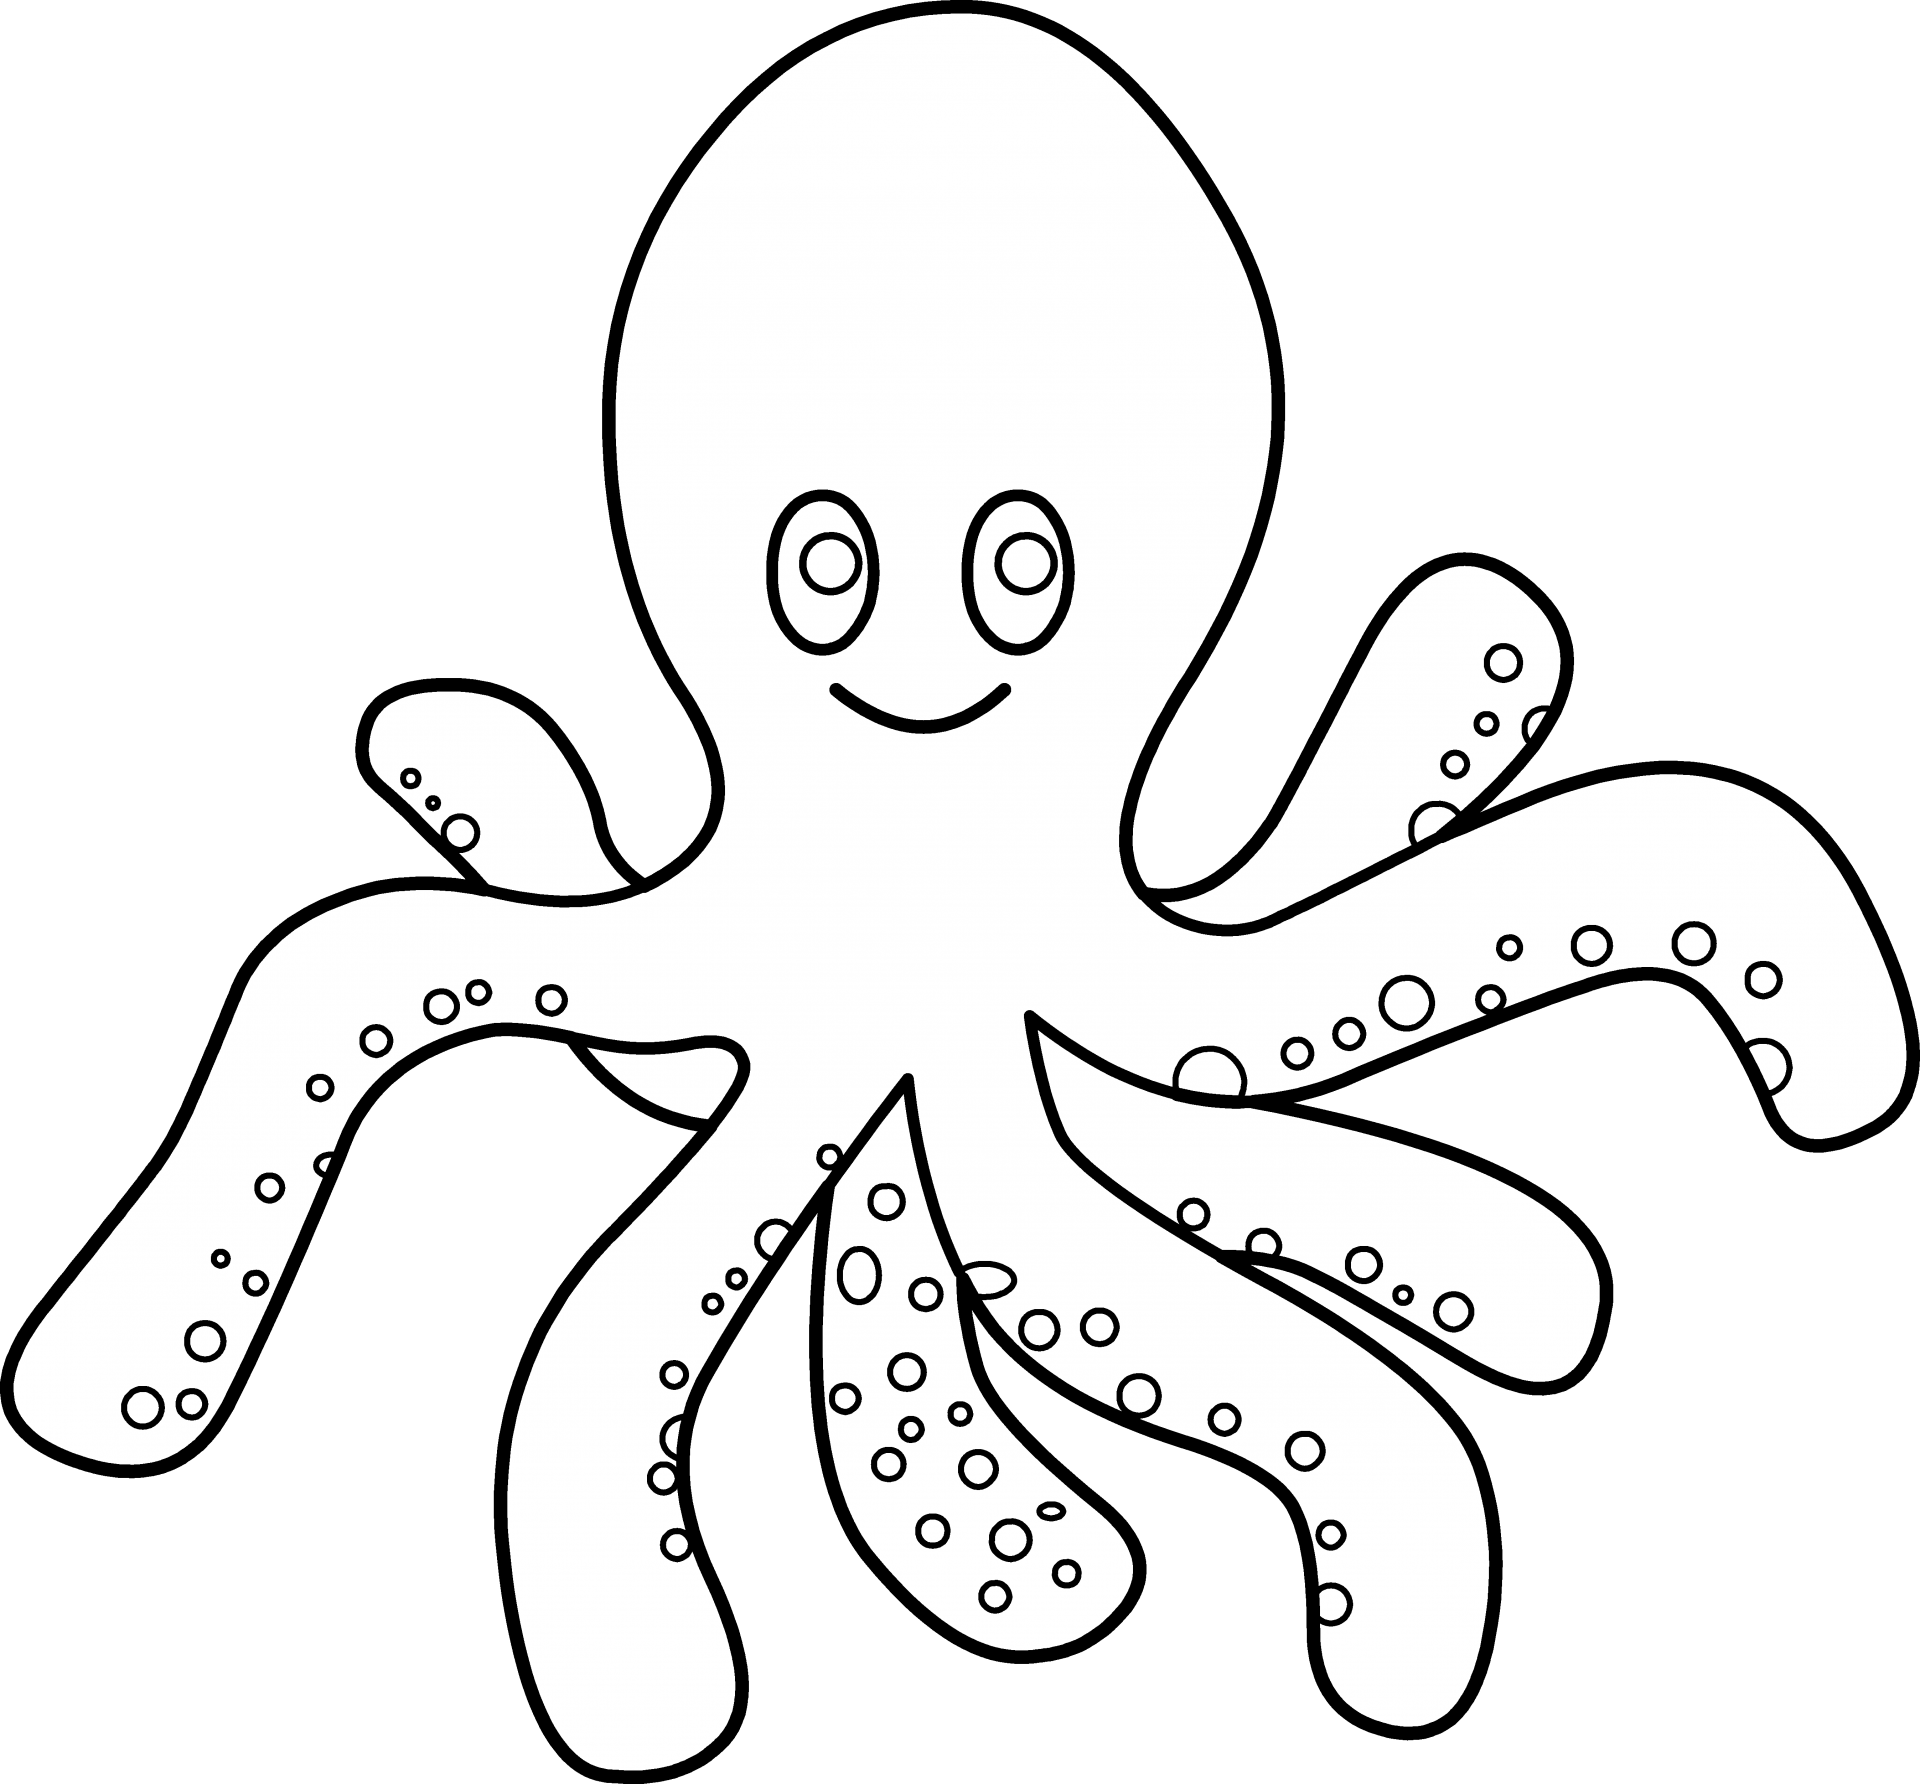 Emoji octopus